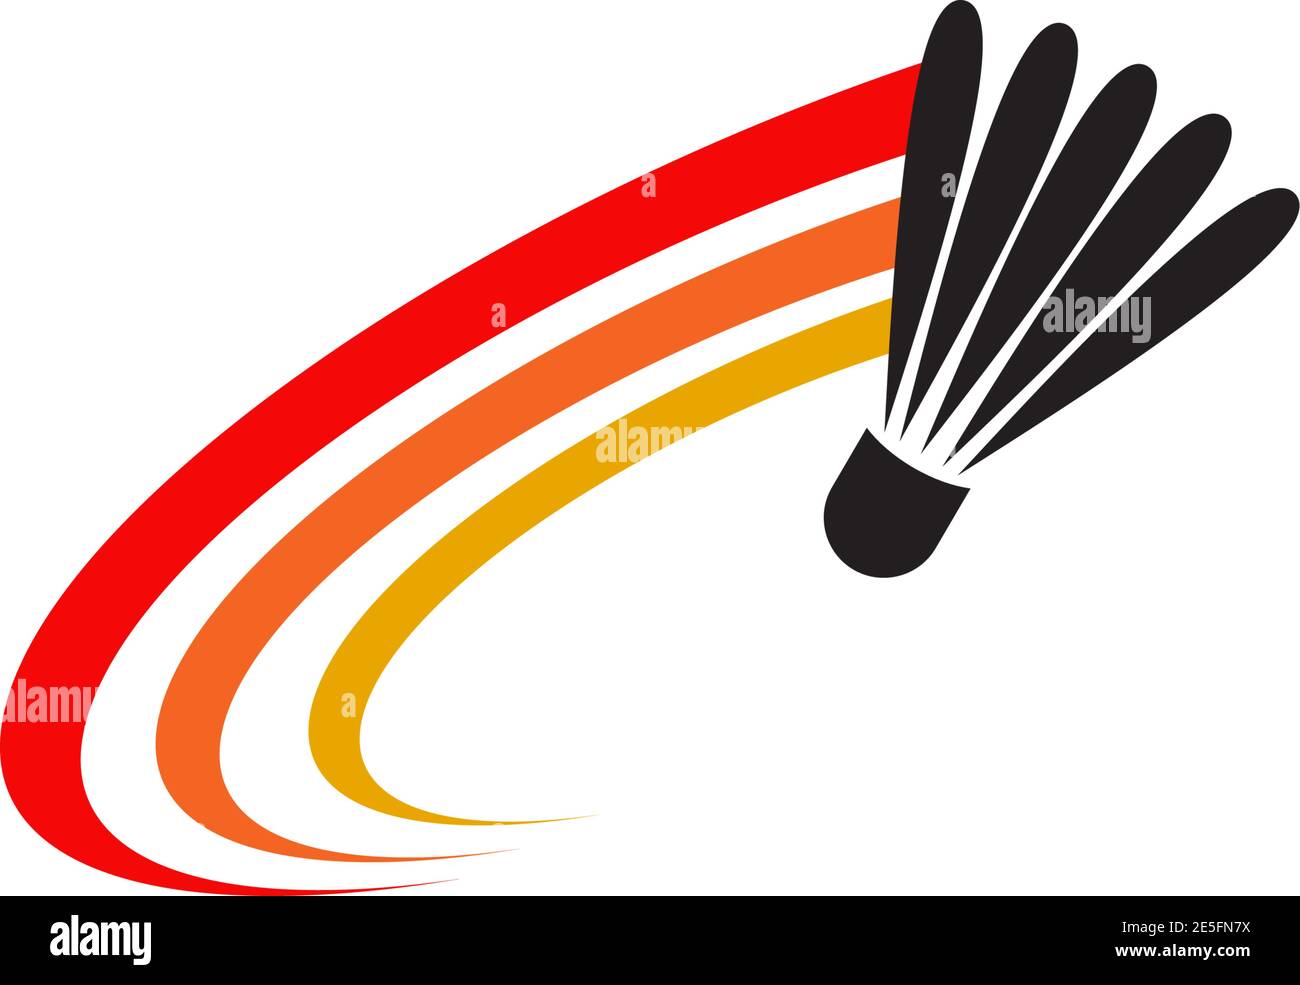 Badminton championship logo design inspiration with shuttlecock icon  illustration template Stock Vector Image & Art - Alamy